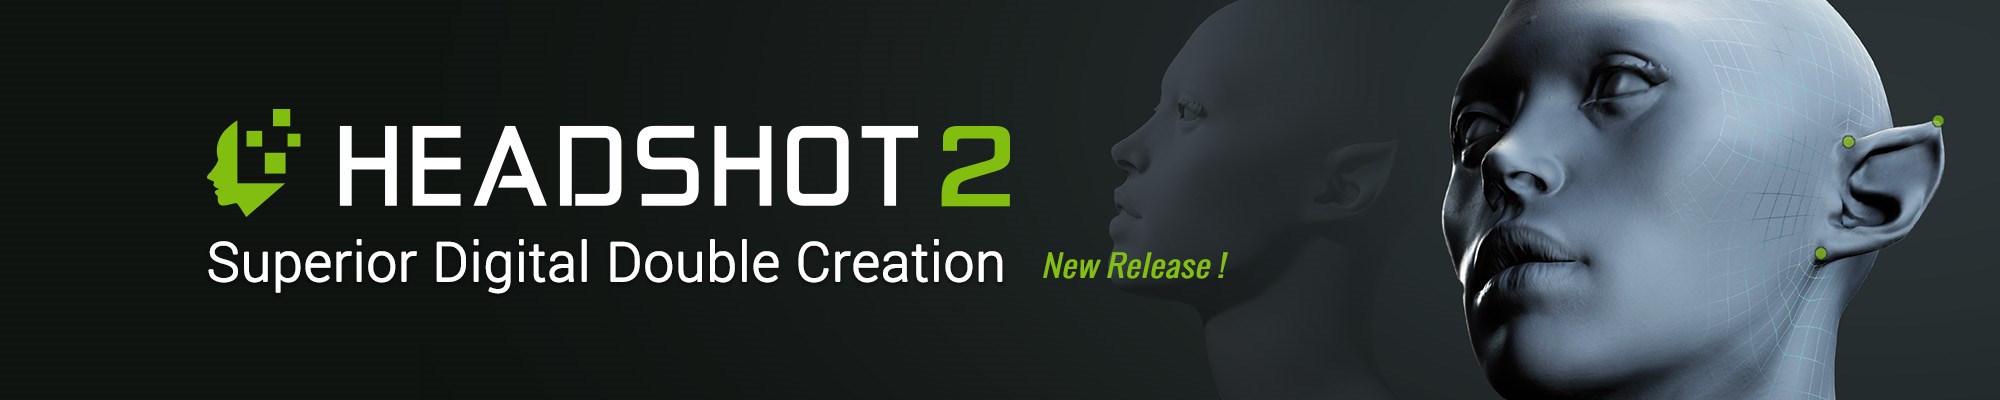 Headshot 2 - Superior Digital Double Creation